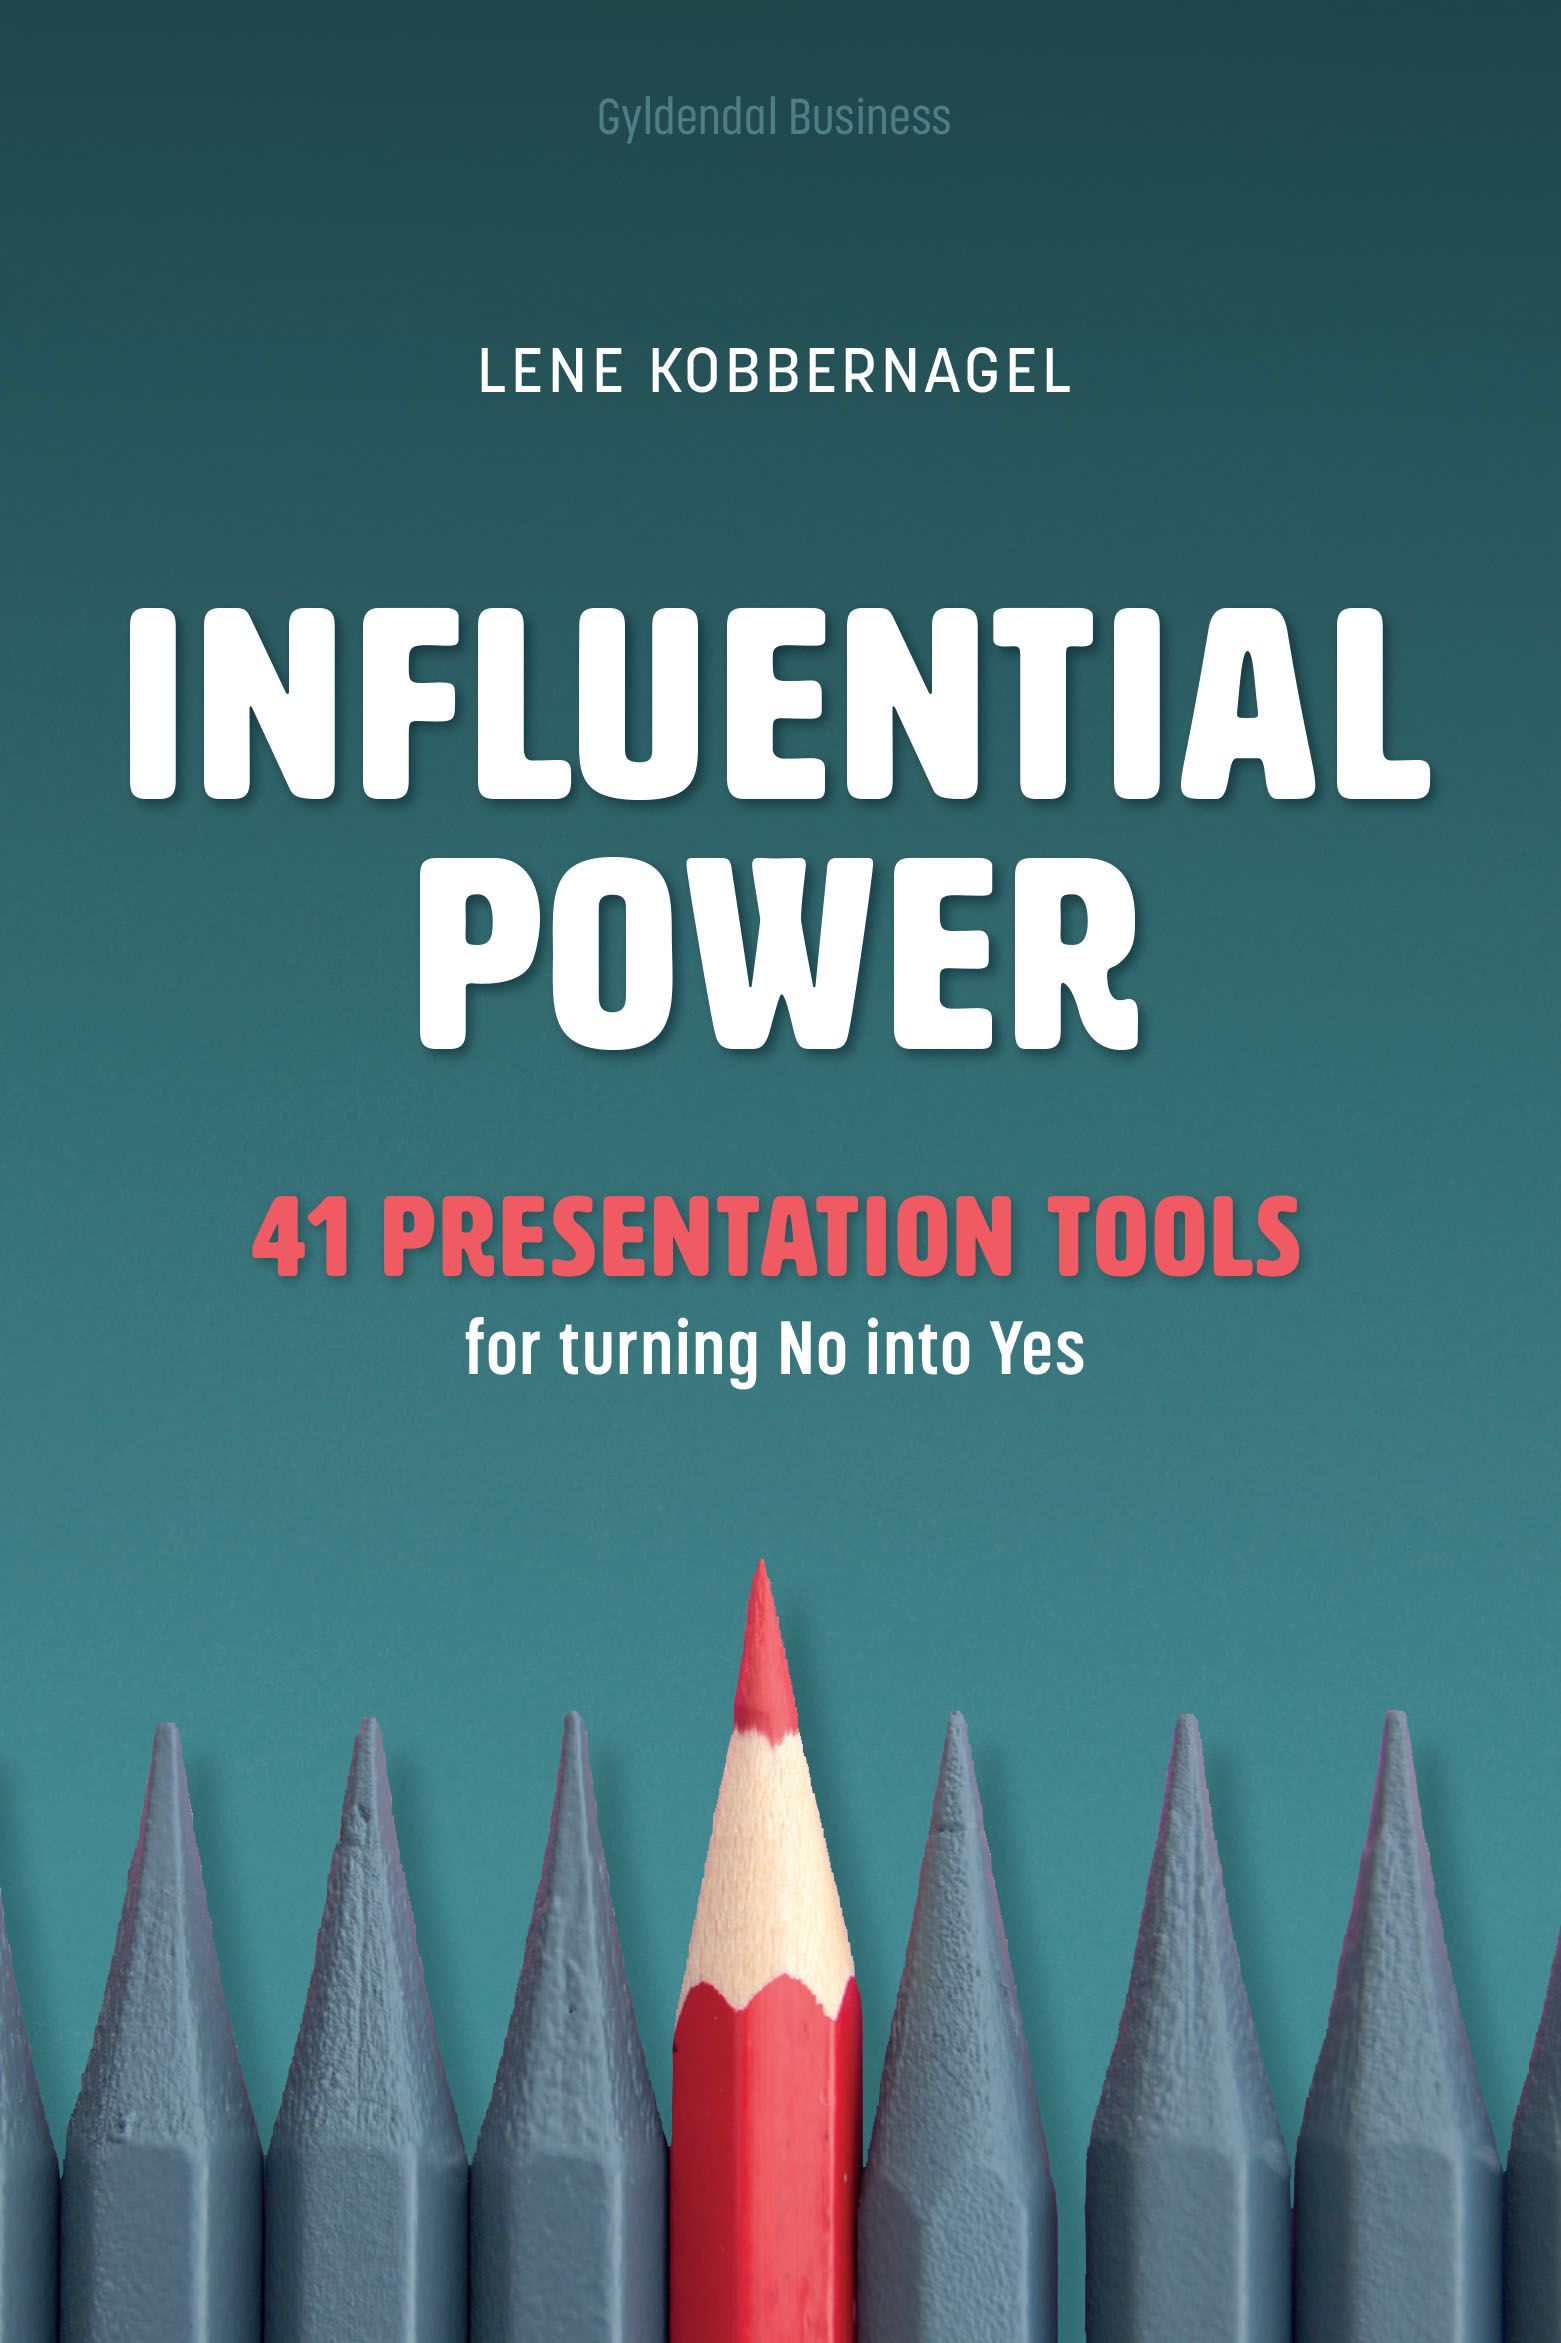 Influential power, eBook by Lene Kobbernagel